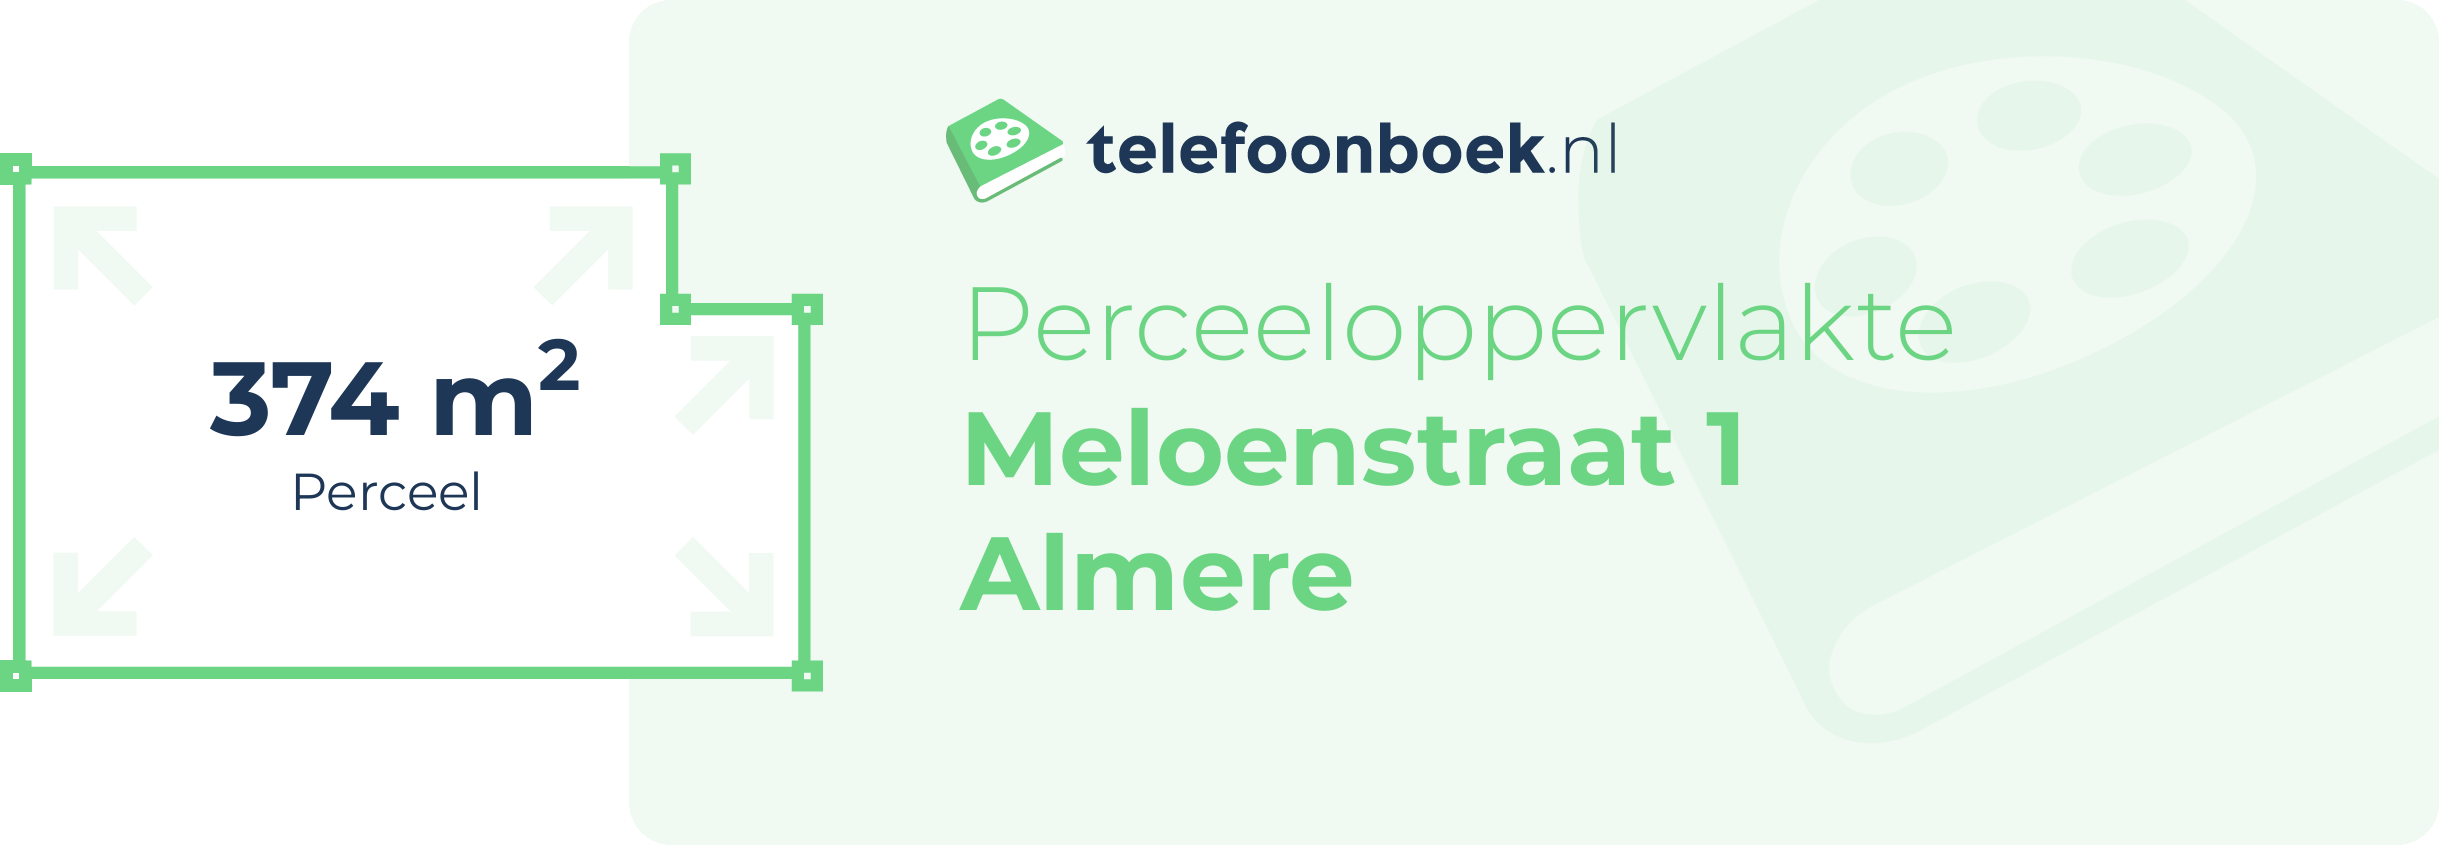 Perceeloppervlakte Meloenstraat 1 Almere